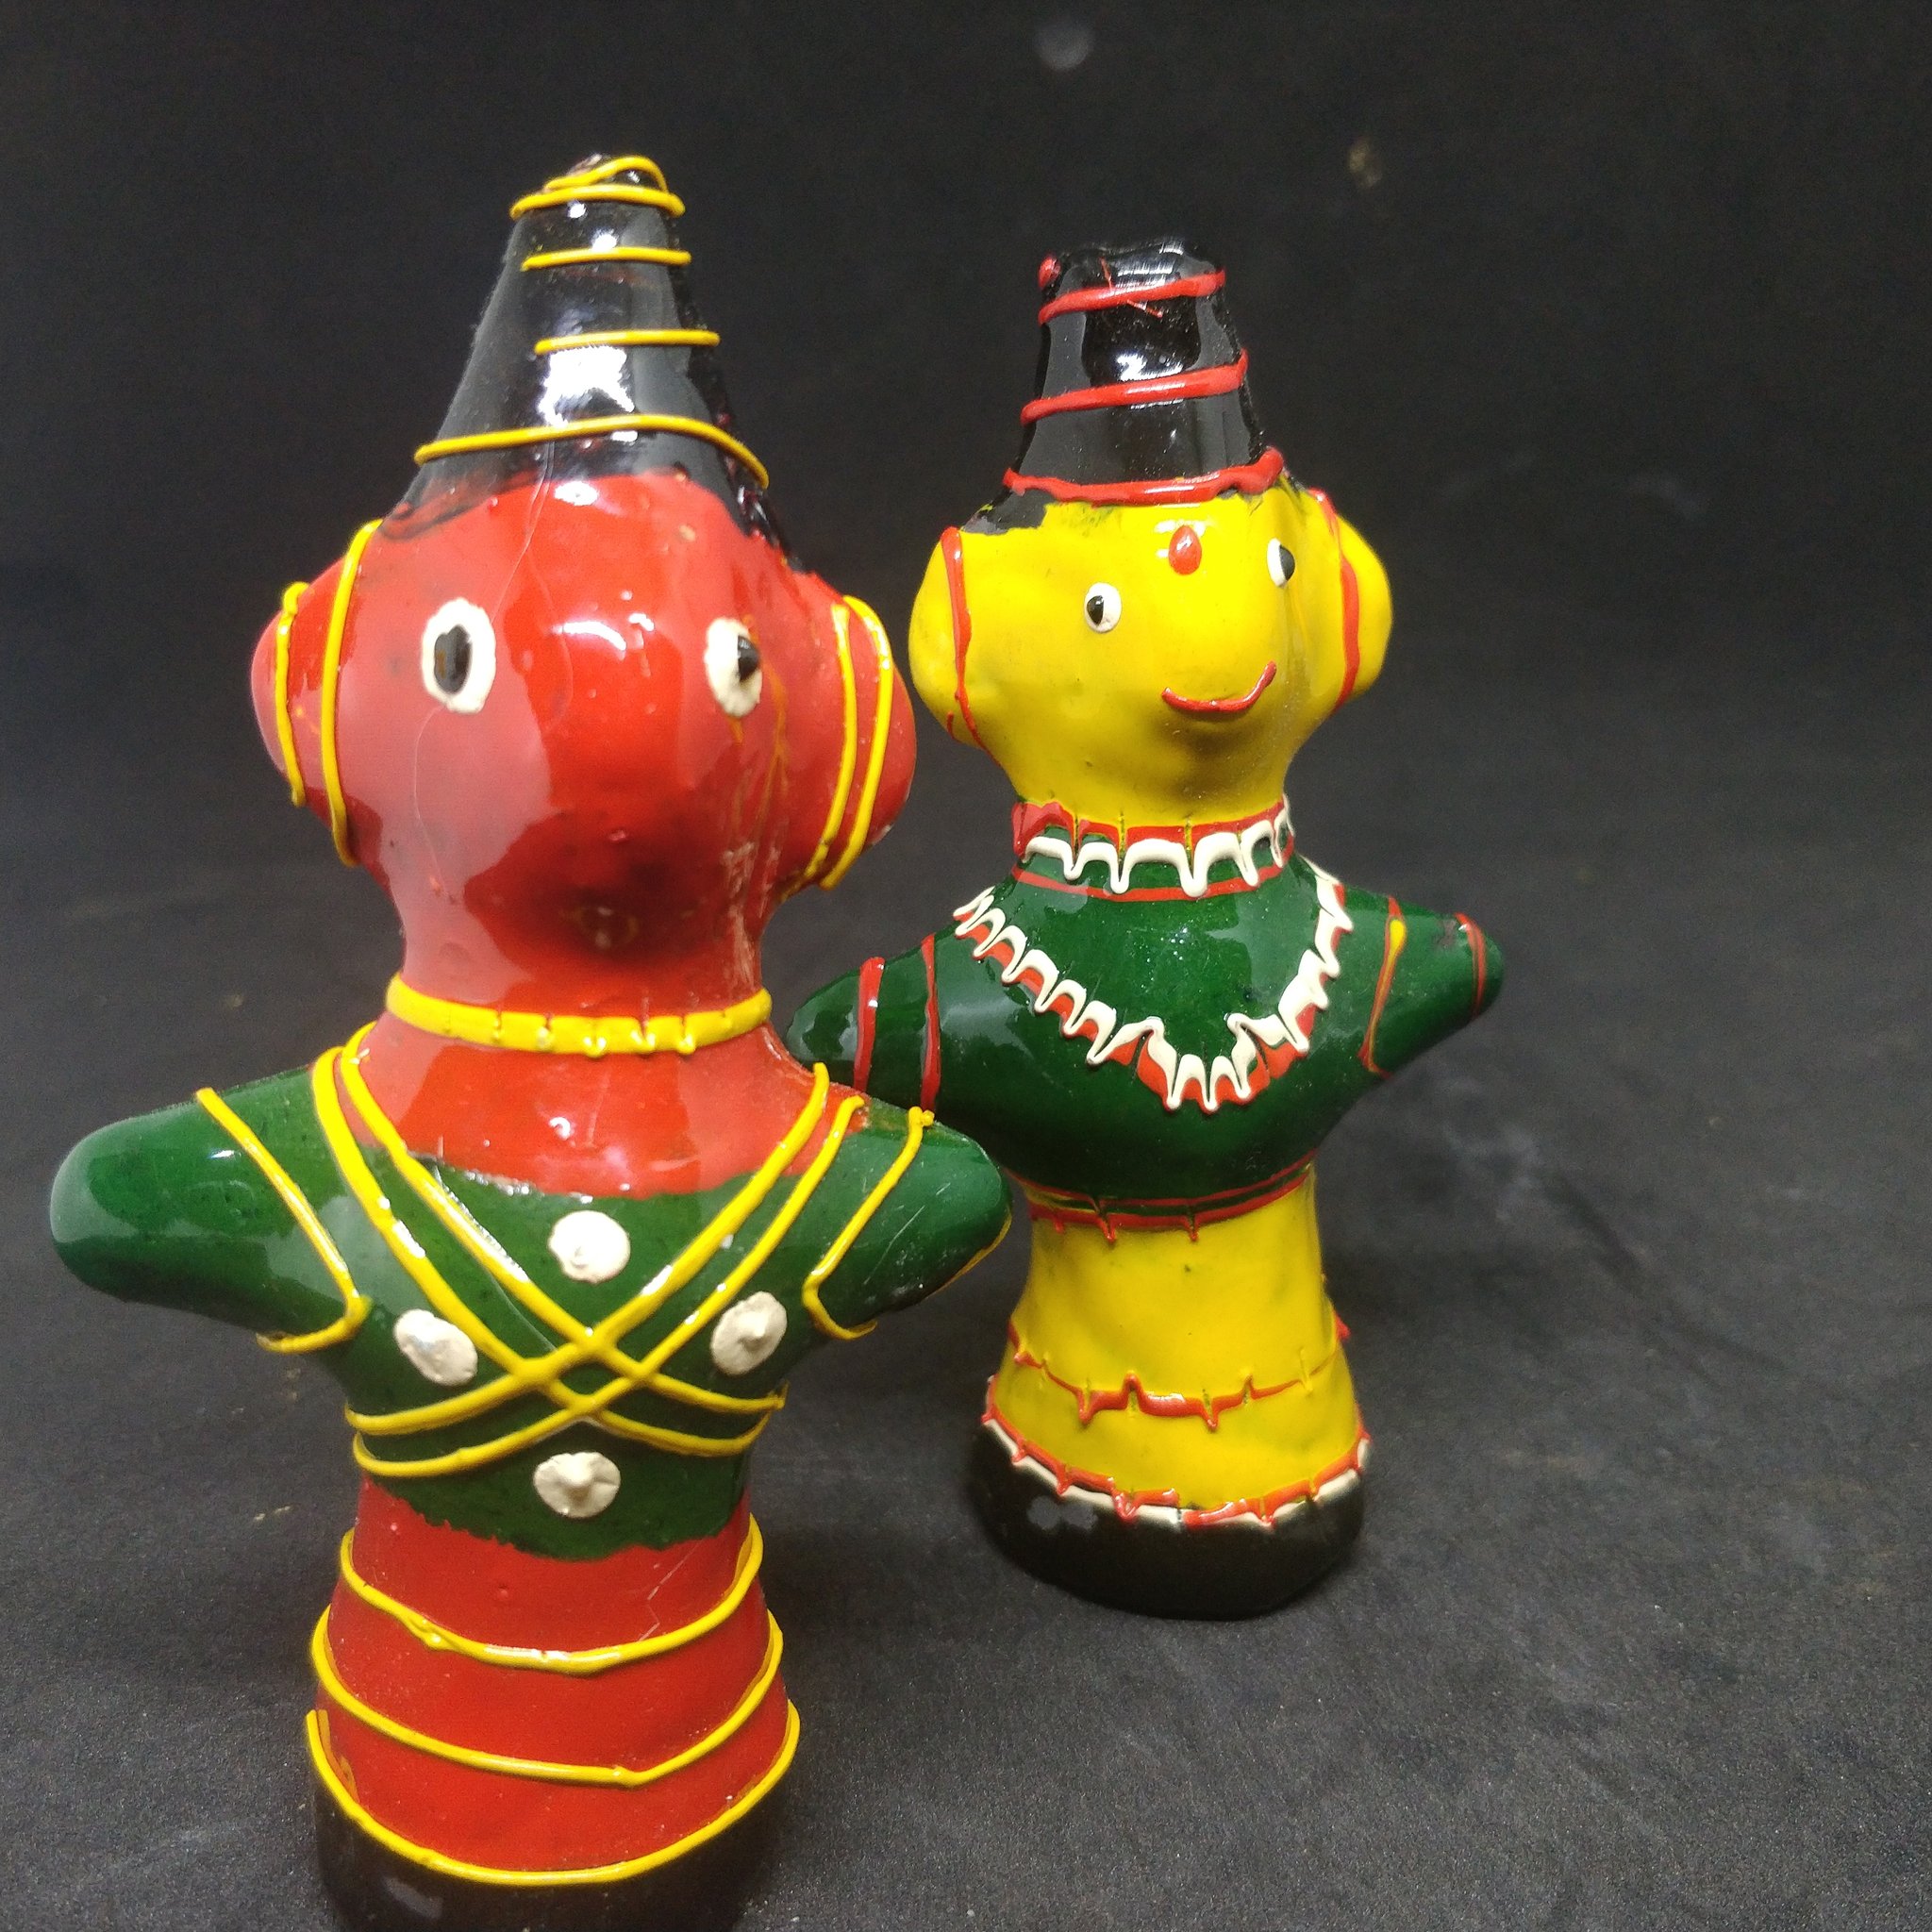 Traditional Toys of Odisha